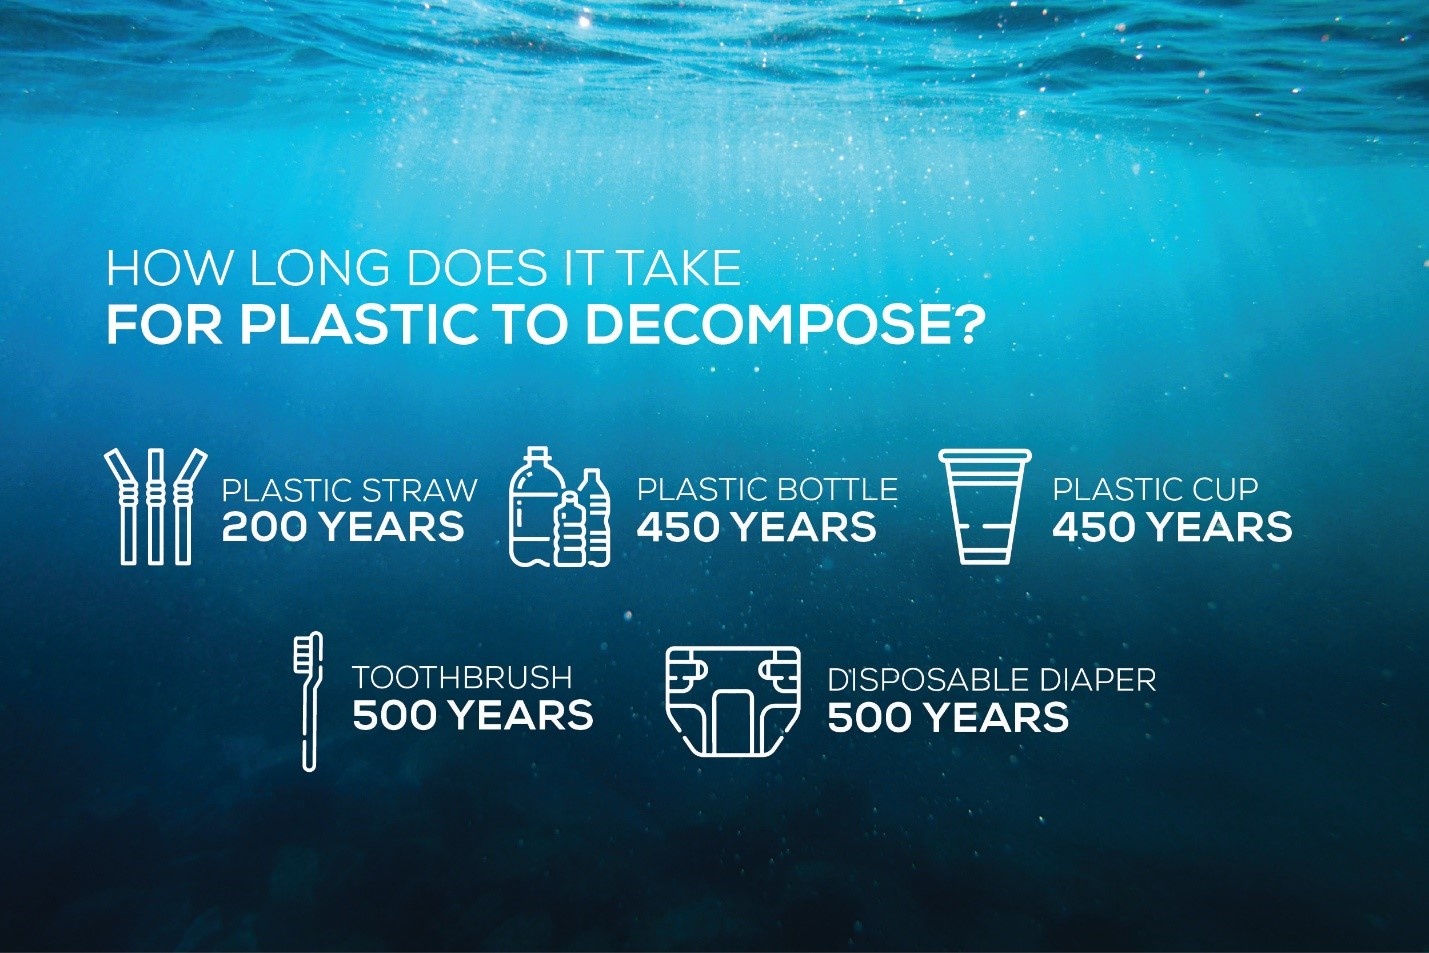 OXO-degradable plastics threaten sustainable development